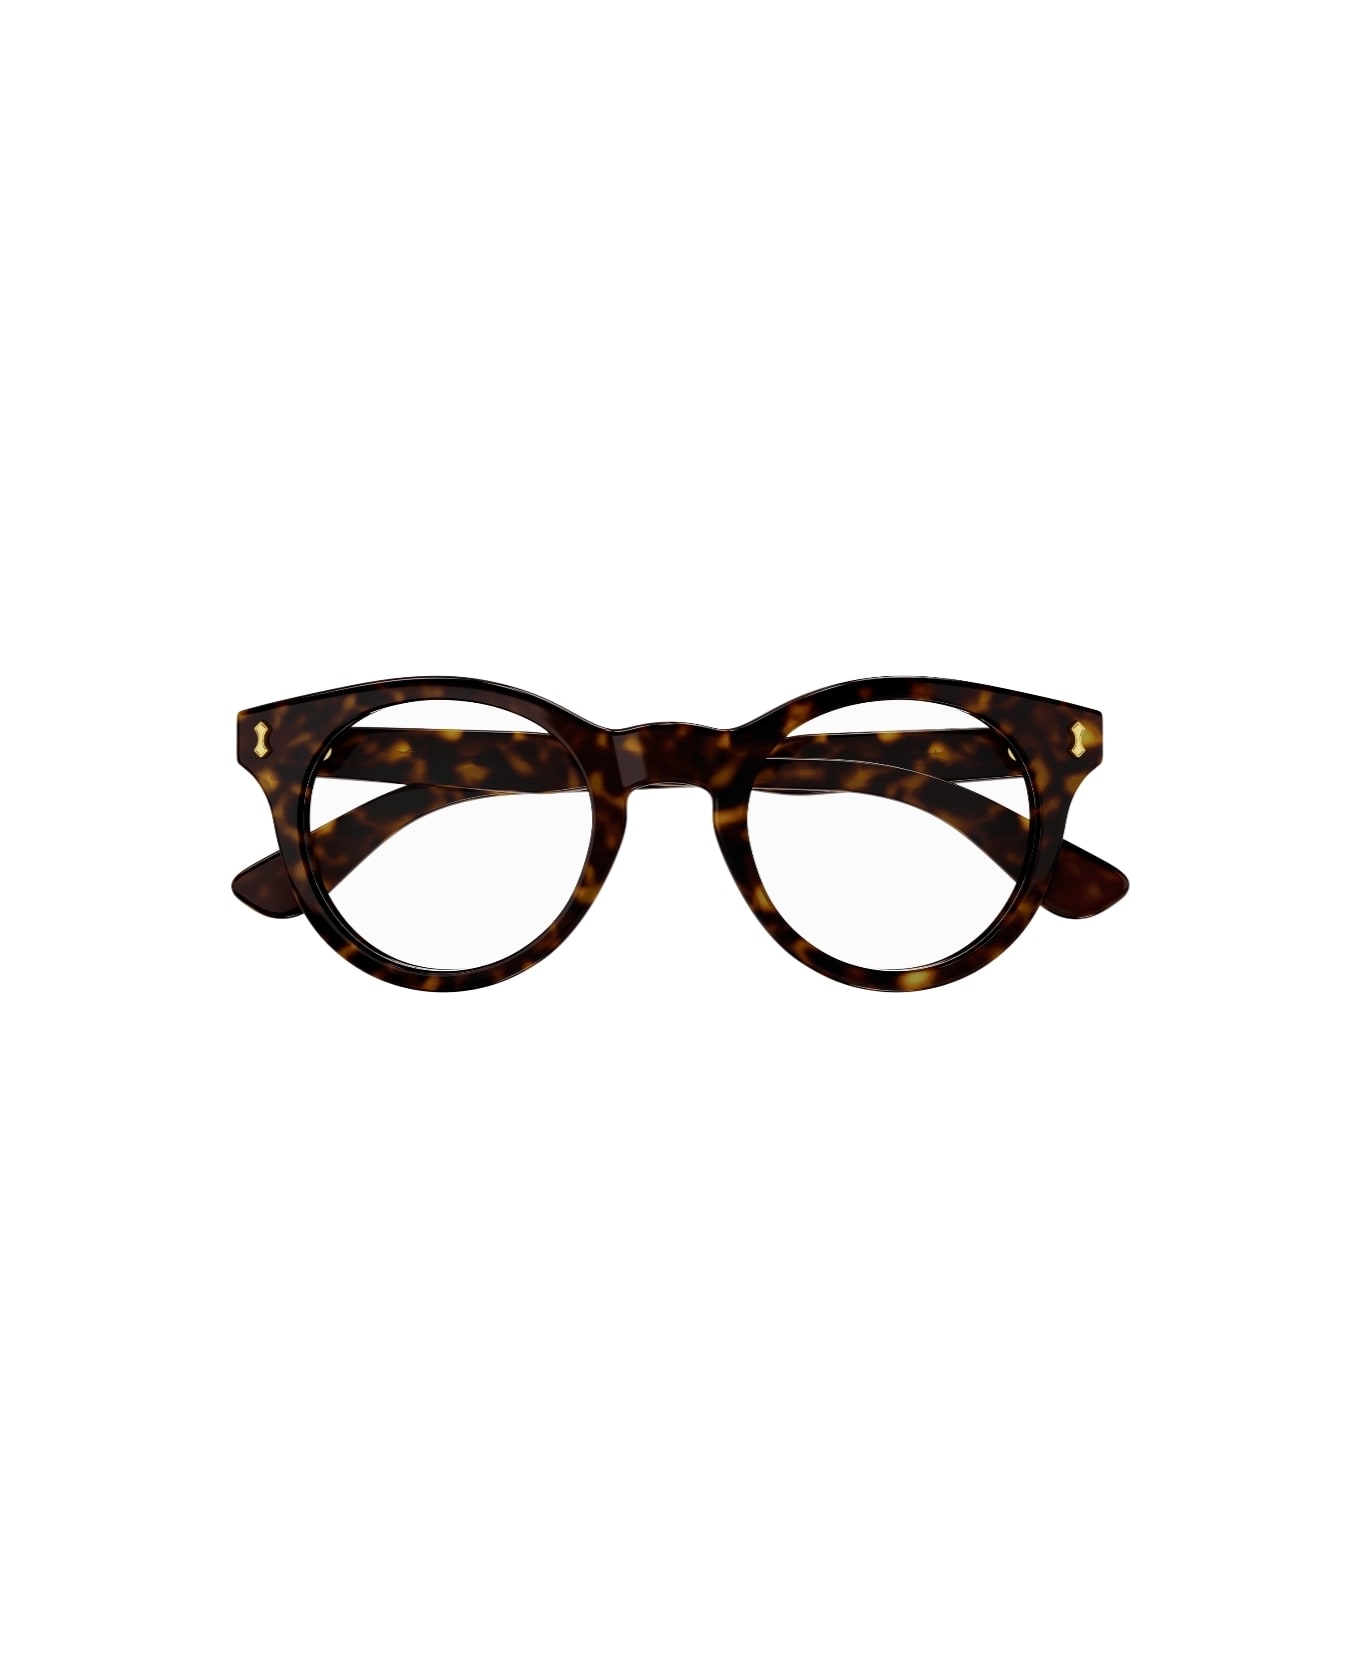 Gucci Eyewear GG1266O 004 Glasses